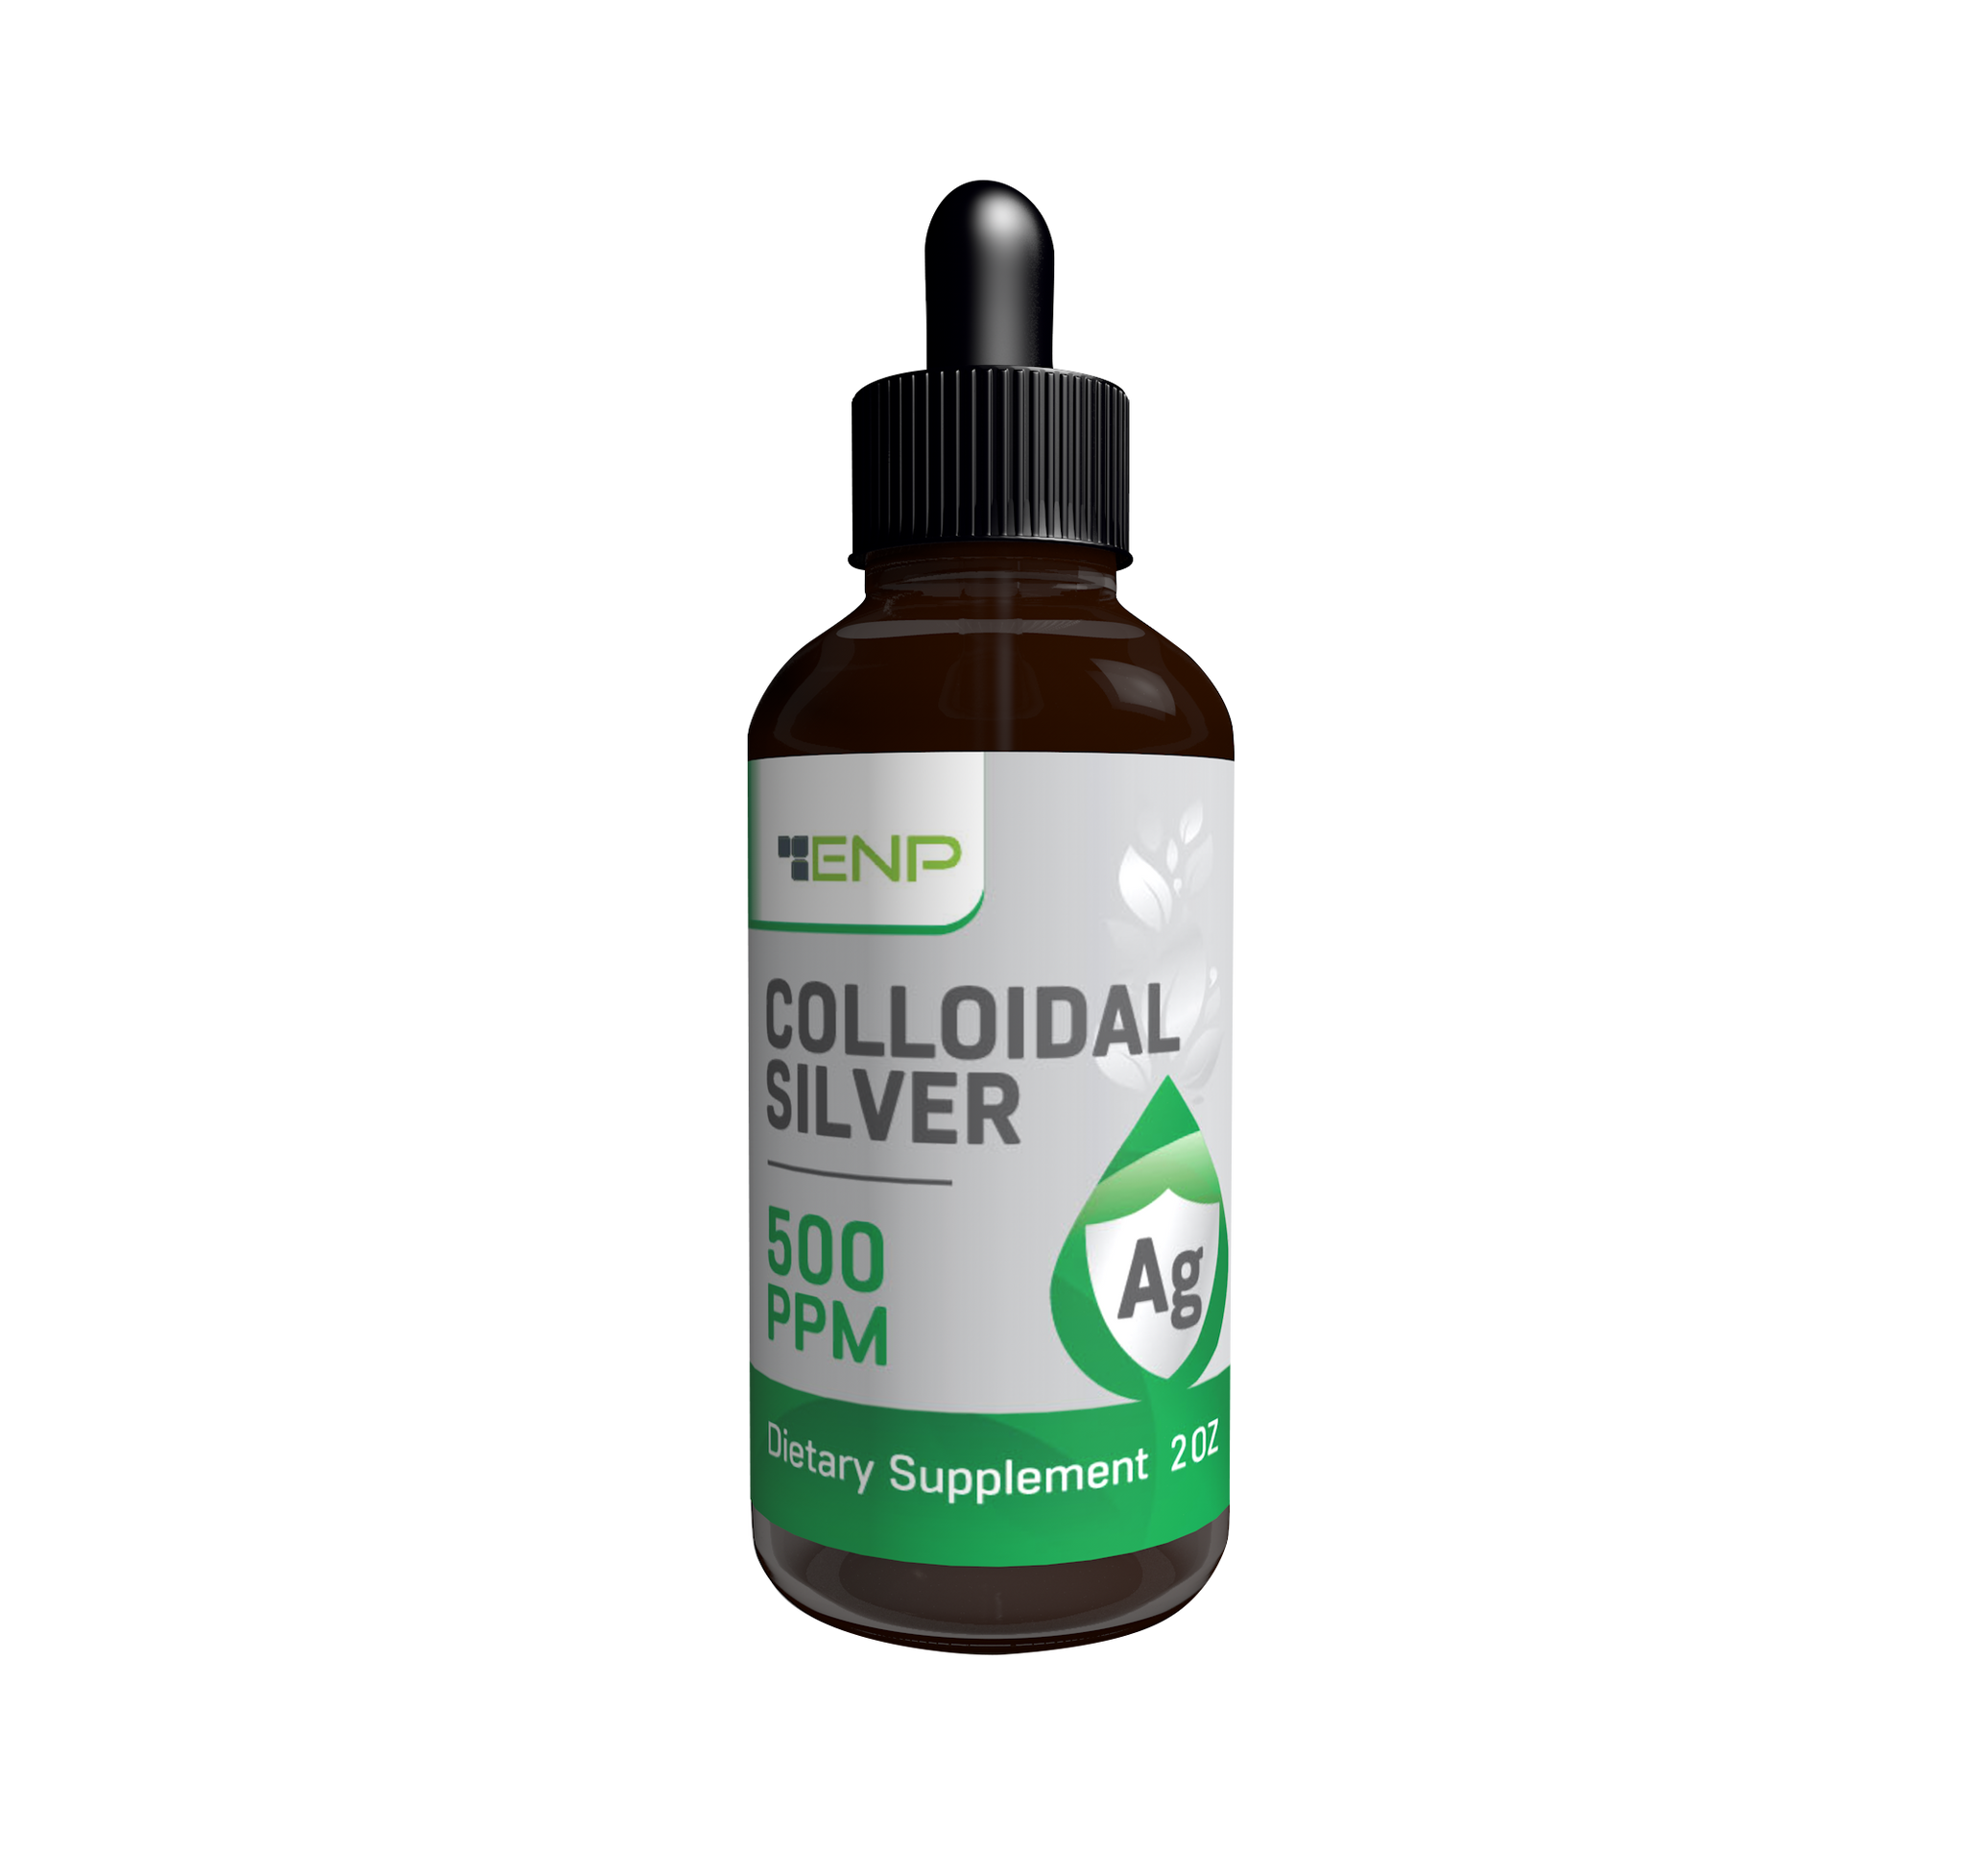 colloidal silver supplement -500 PPM